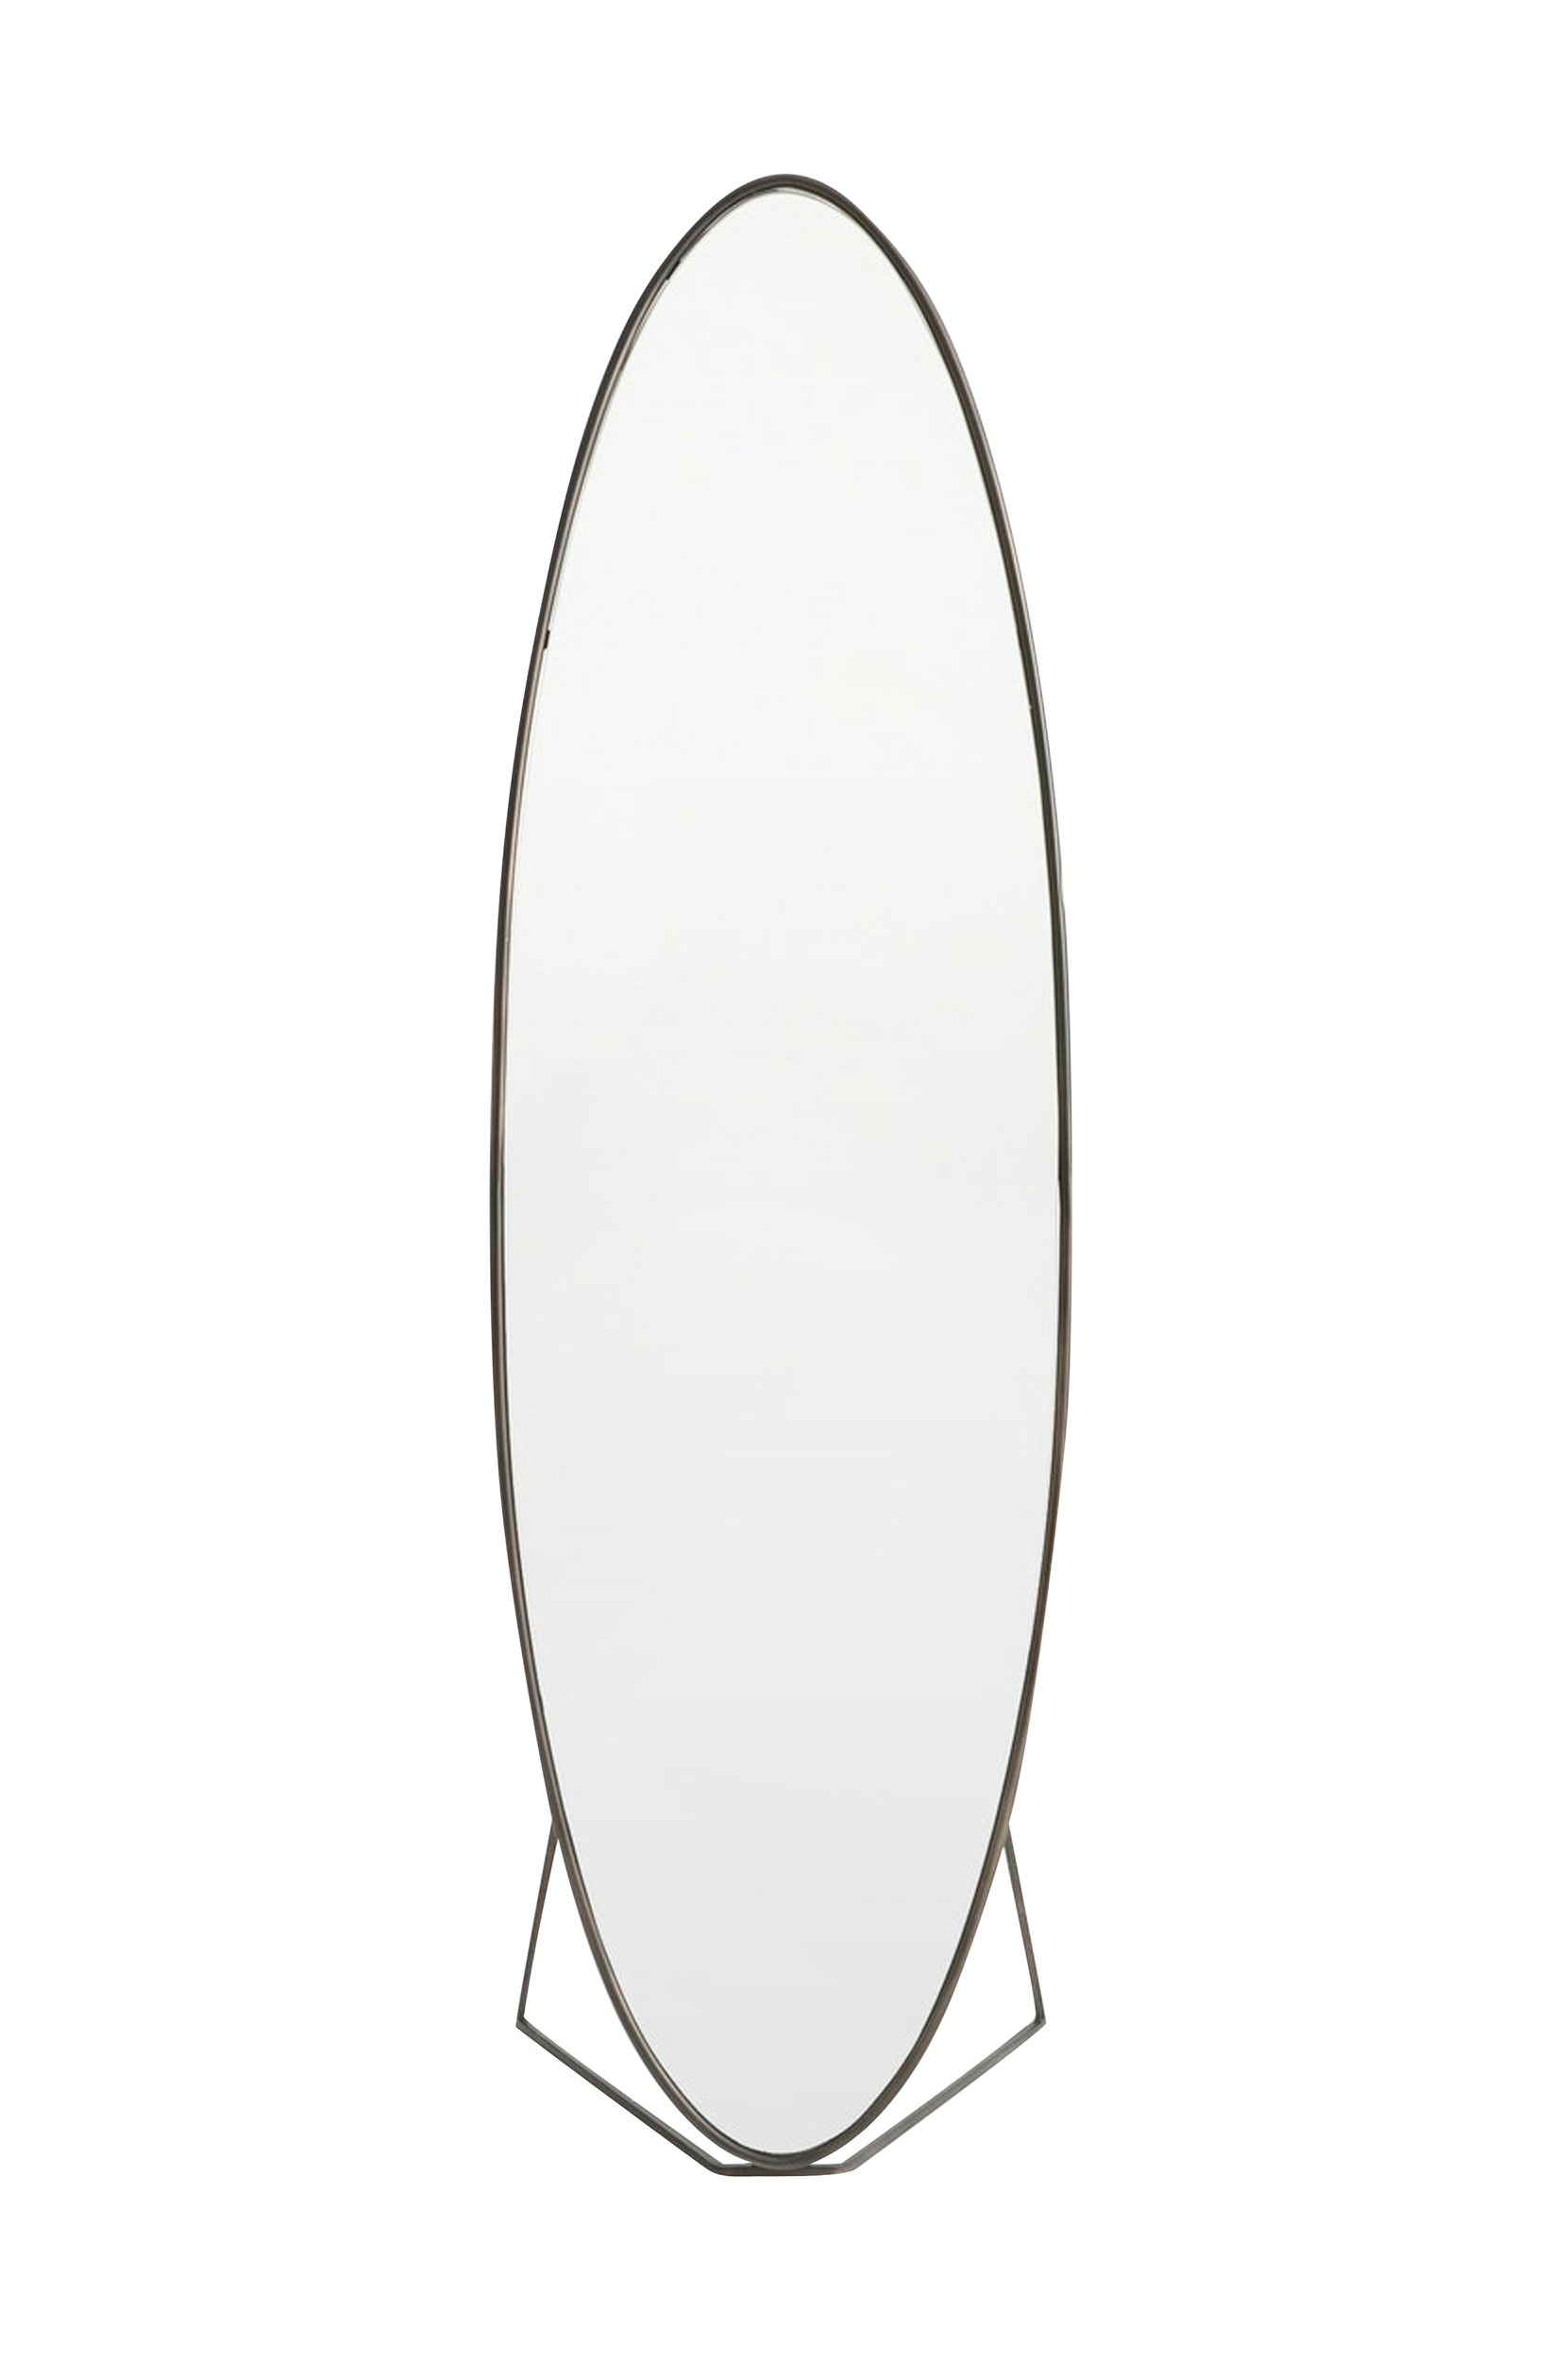 La Redoute - Oval spegel i Psyche-stil metall H169,5 cm, Koban - Grå